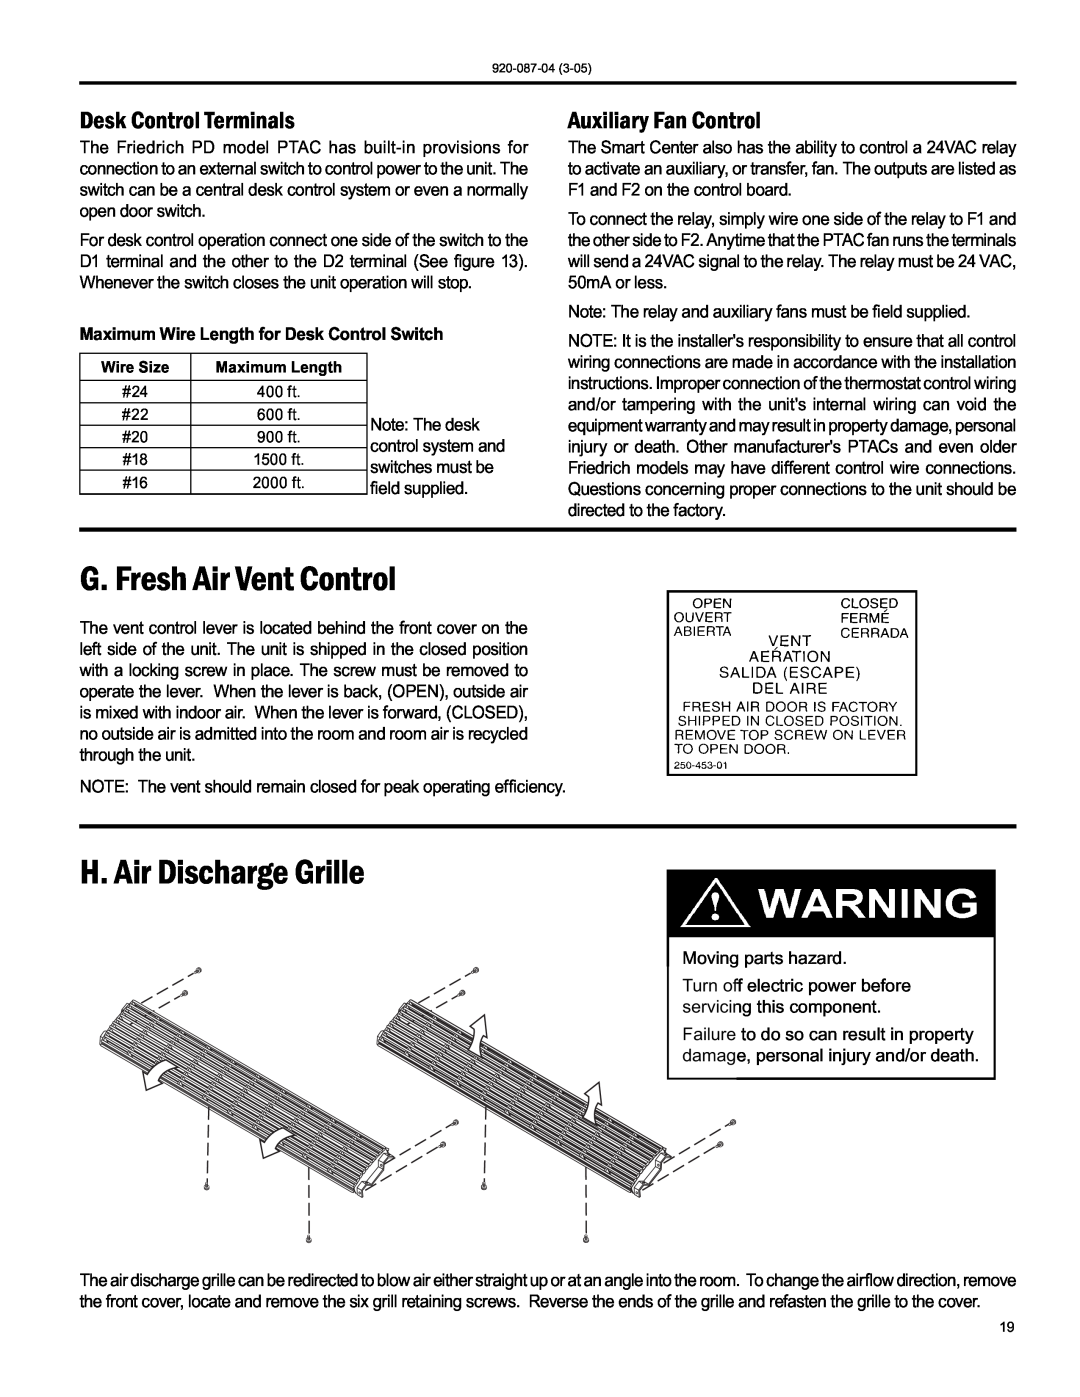 Friedrich 920-087-04 (3-05) manual G. Fresh Air Vent Control, H. Air Discharge Grille, Desk Control Terminals 